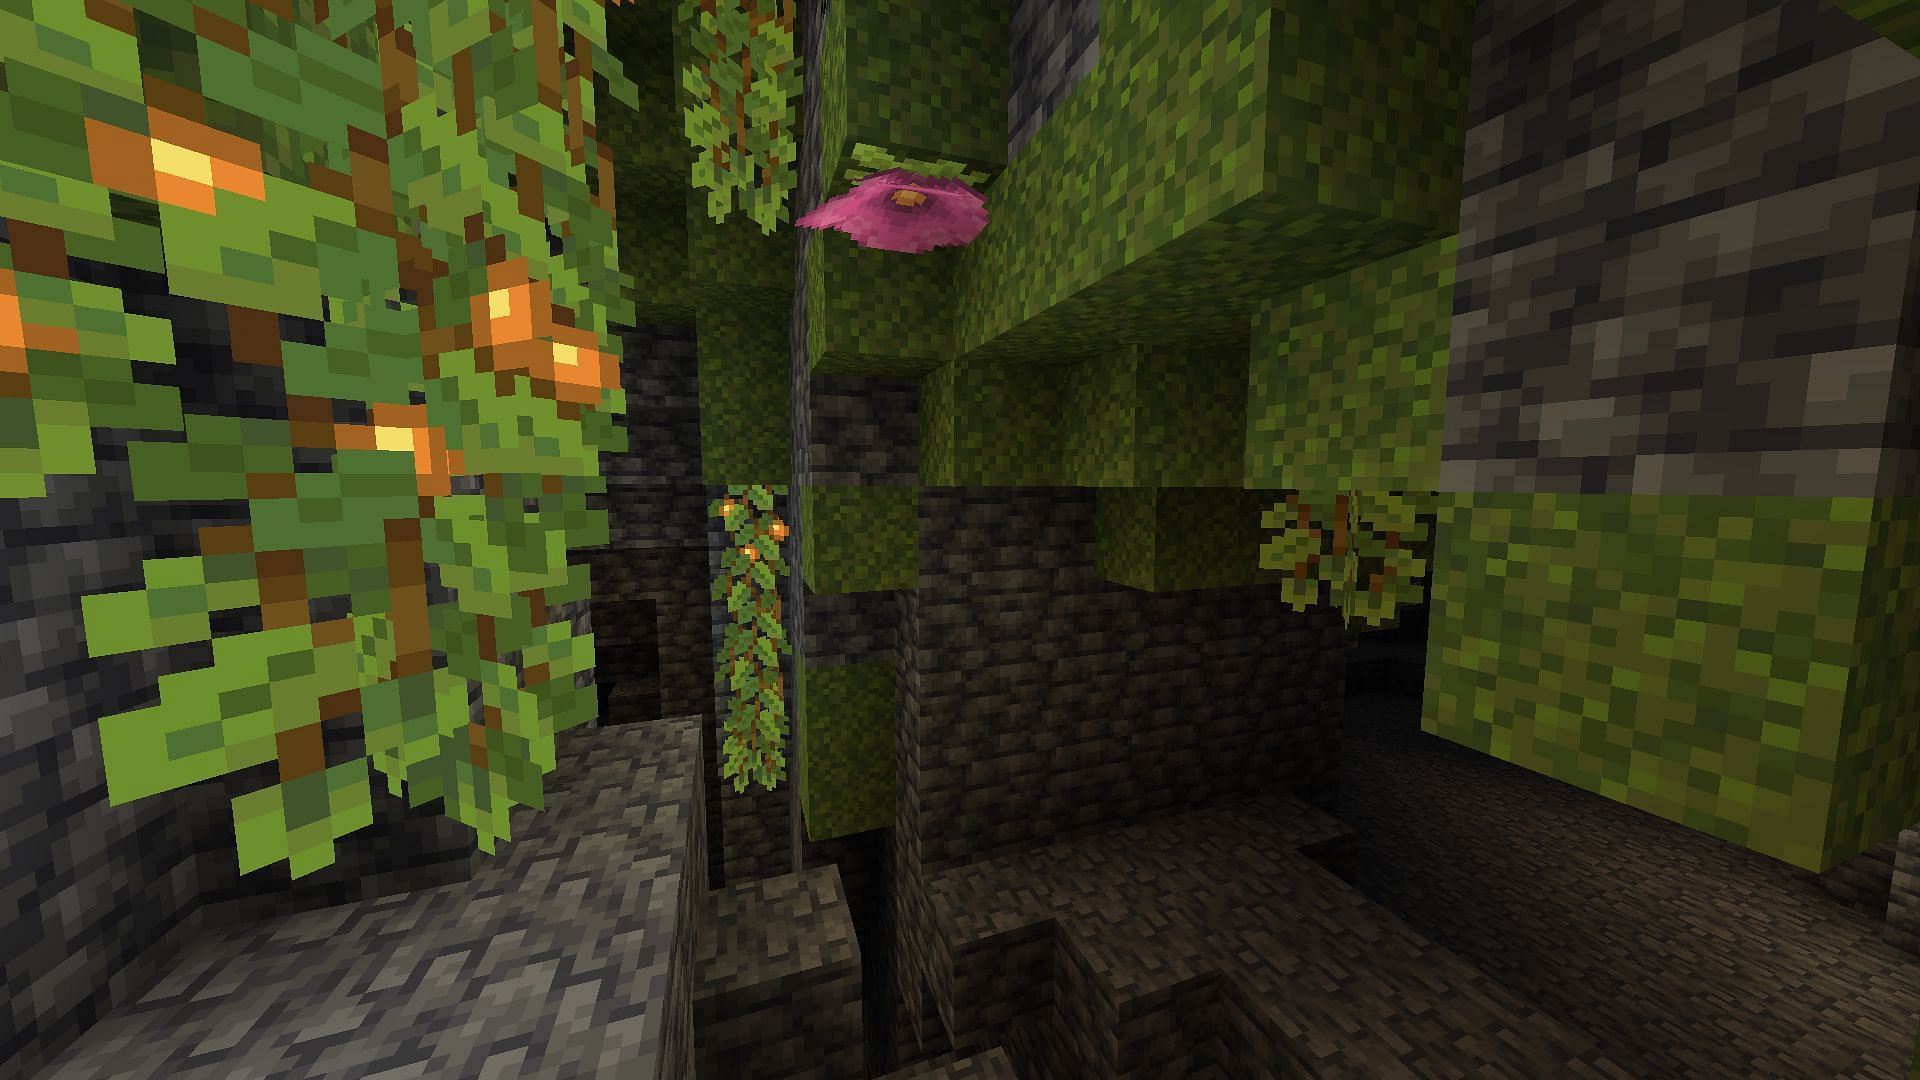 Lush cave biome in Minecraft 1.18 (Image via Minecraft)